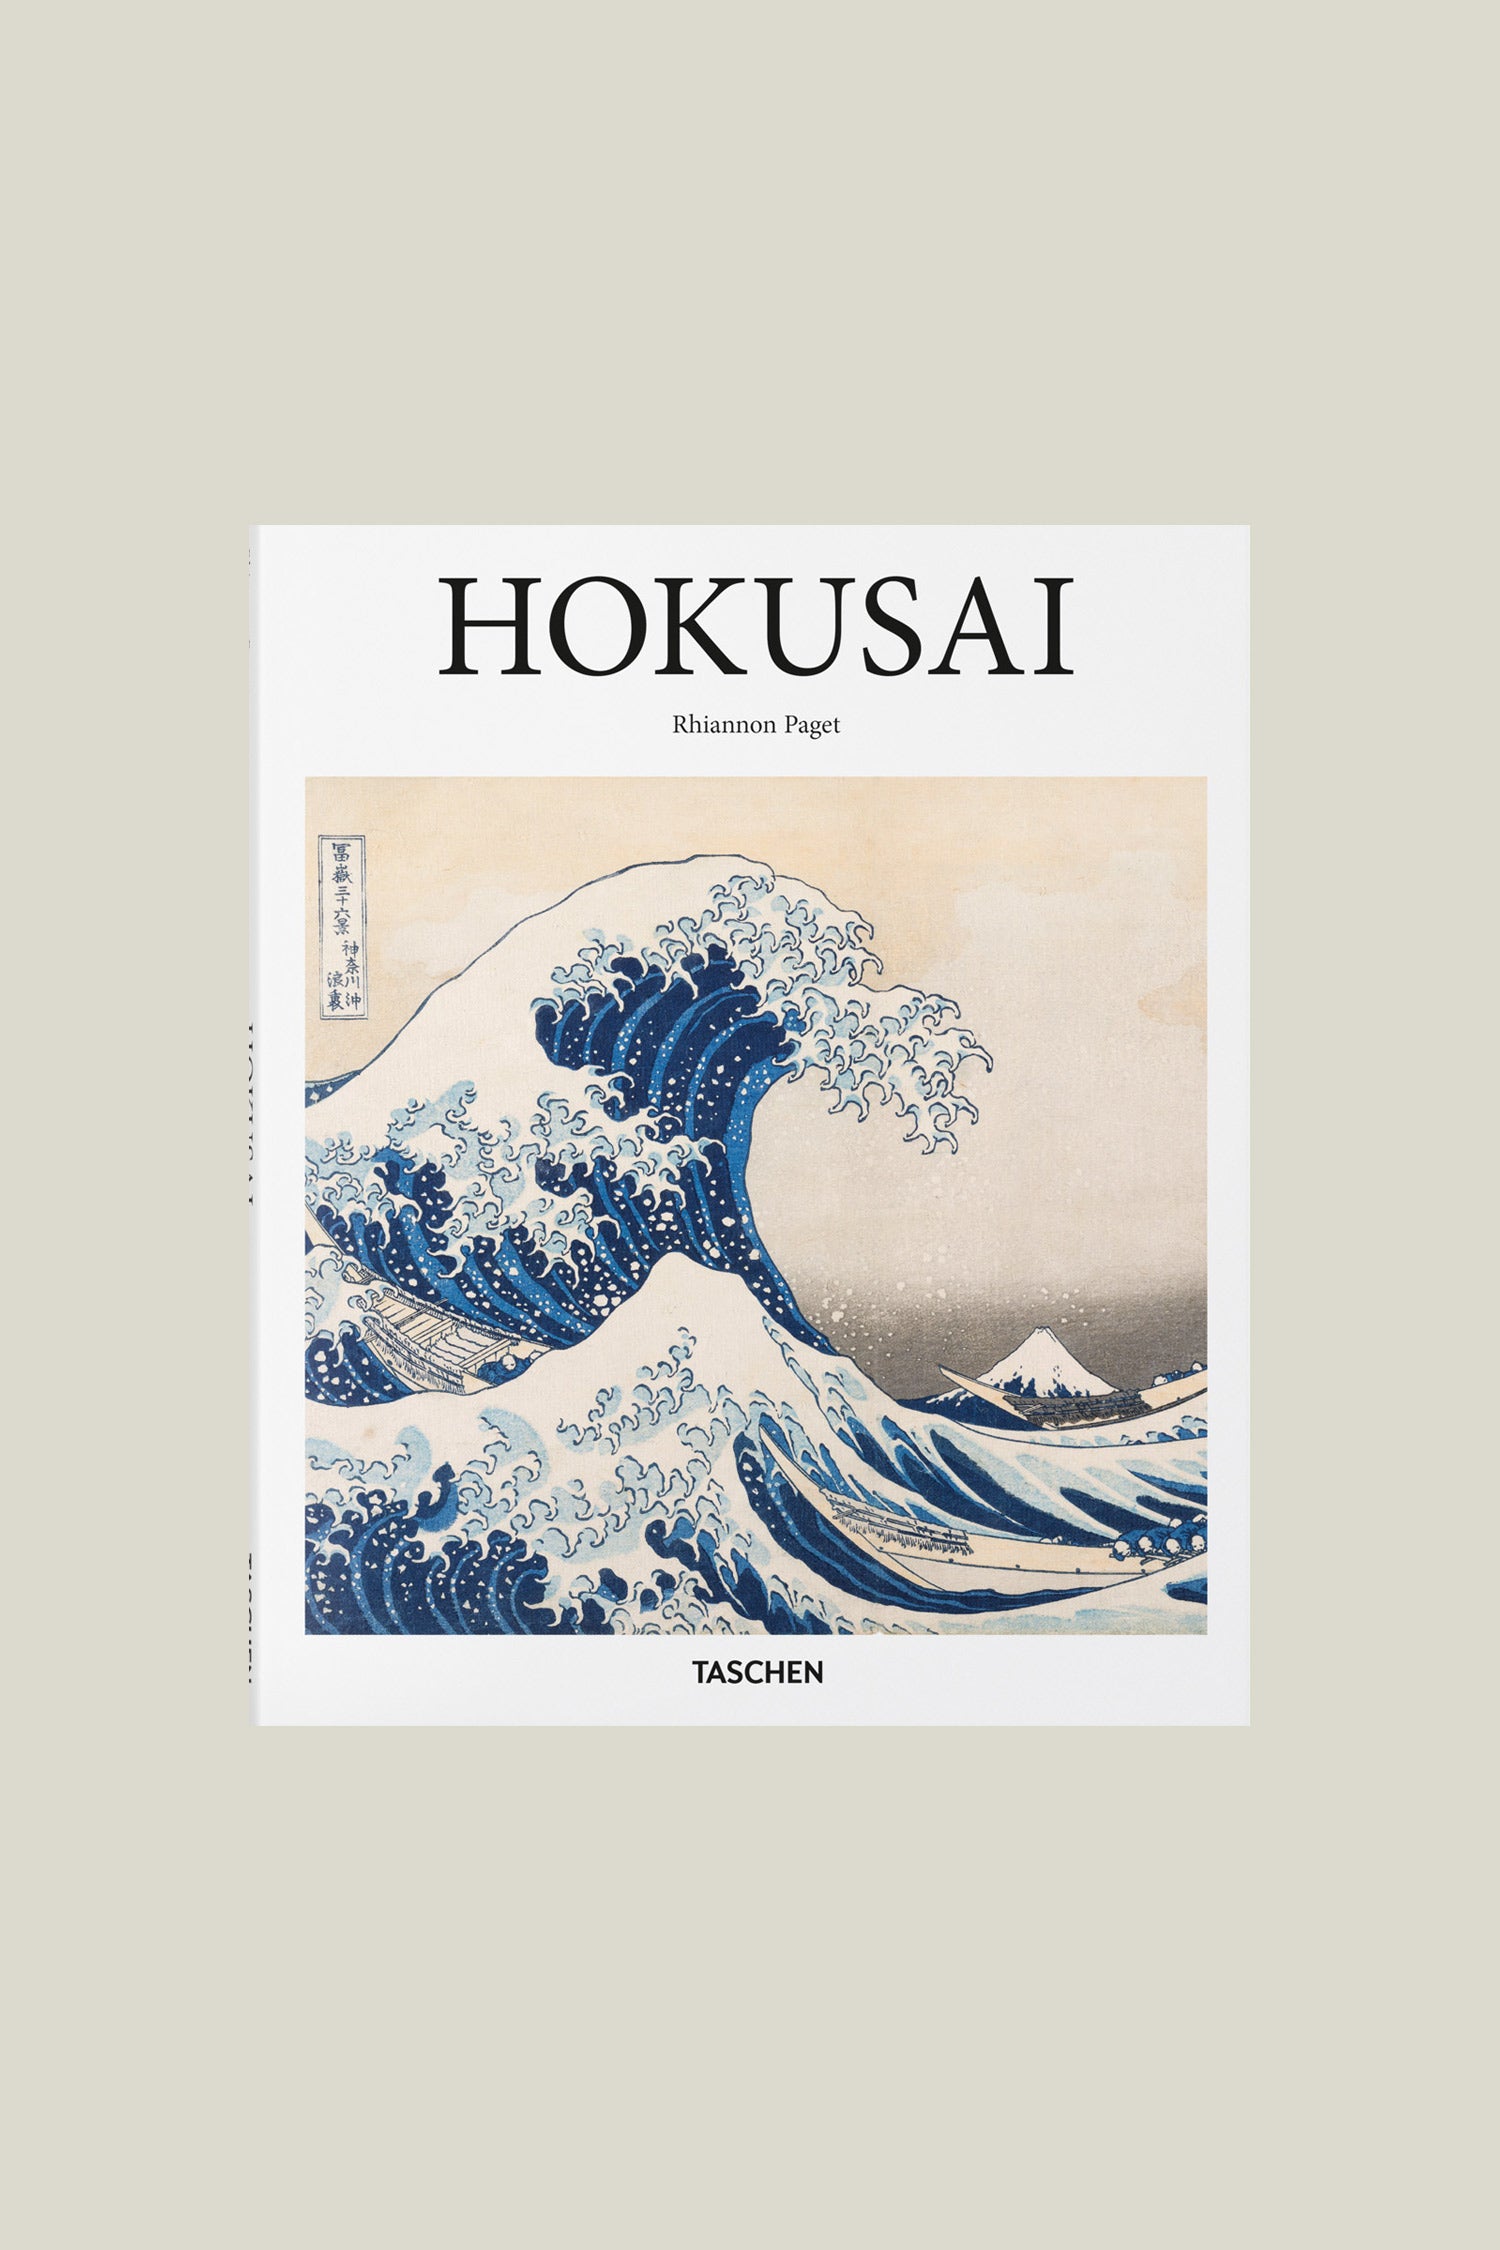 Hokusai - Tusnami of the art world